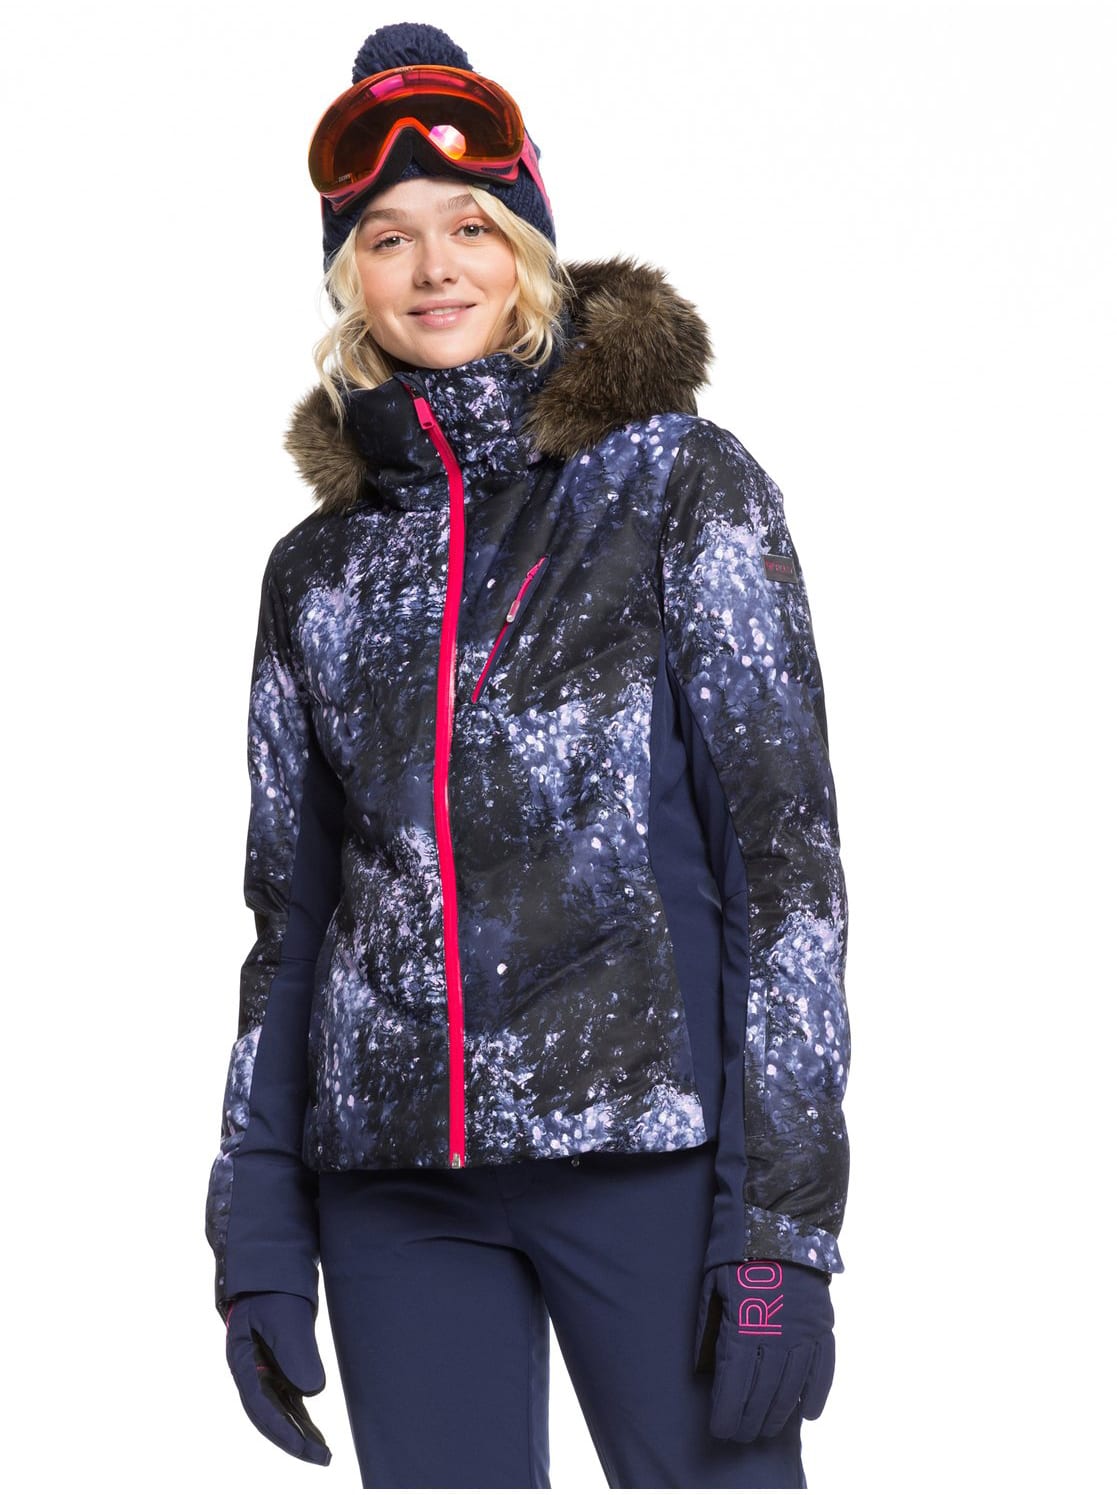 | sale Jacket model Hot Snowstorm glamor hot Roxy at Plus Sale Snowboard Womens